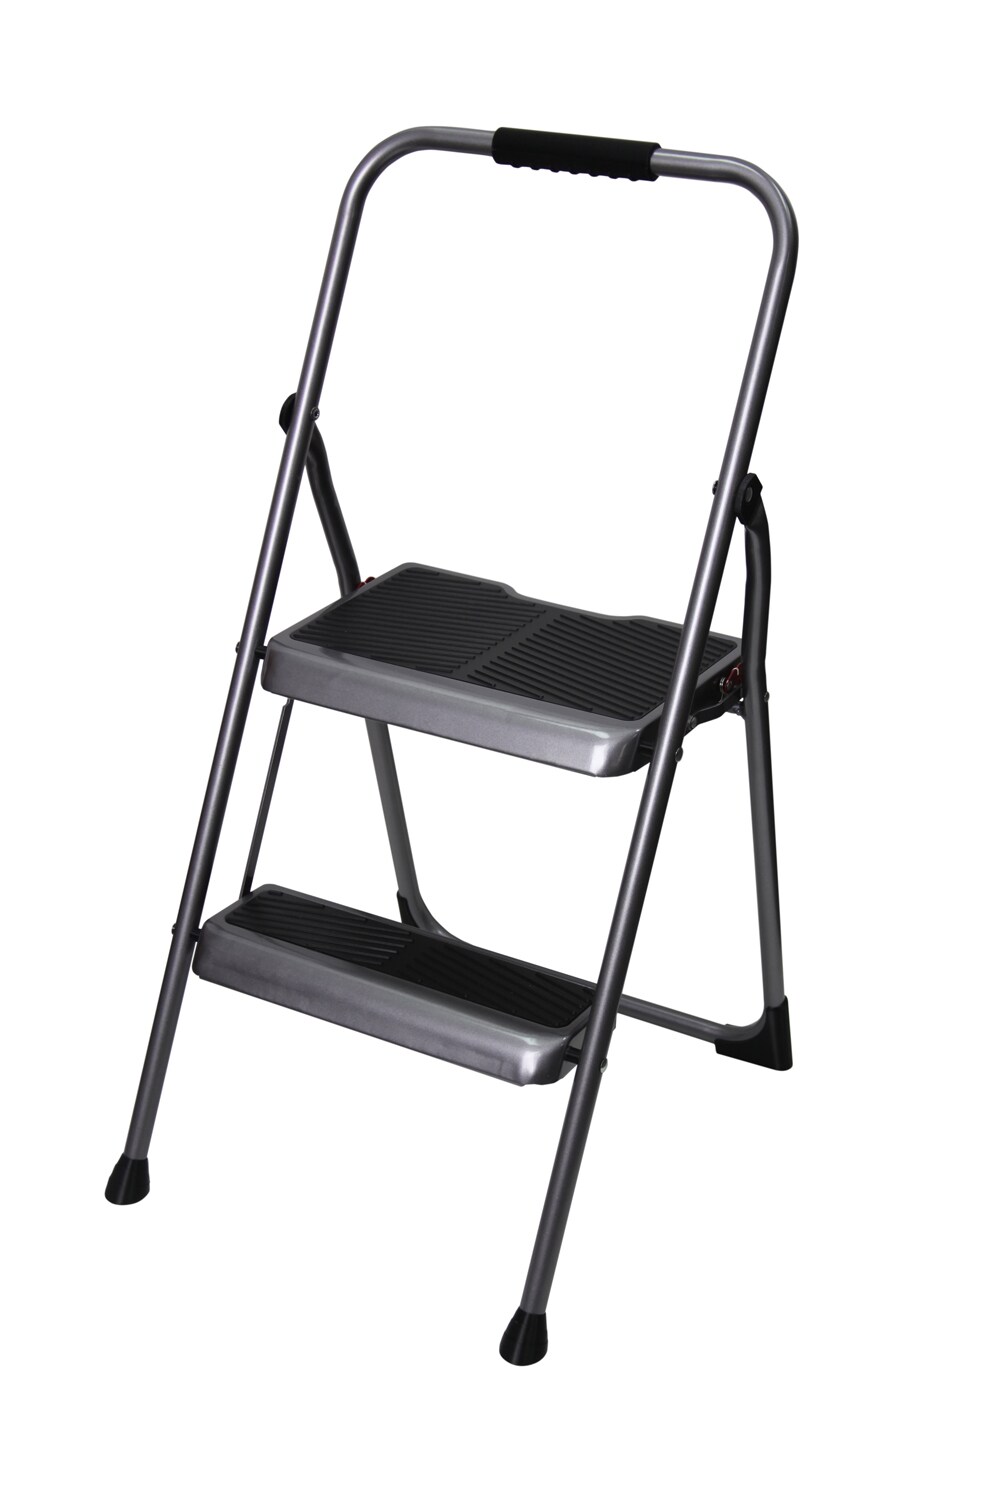 Gorilla 2-Step Steel Lightweight Stool Ladder 225 lbs Load Cap Type II Duty R 